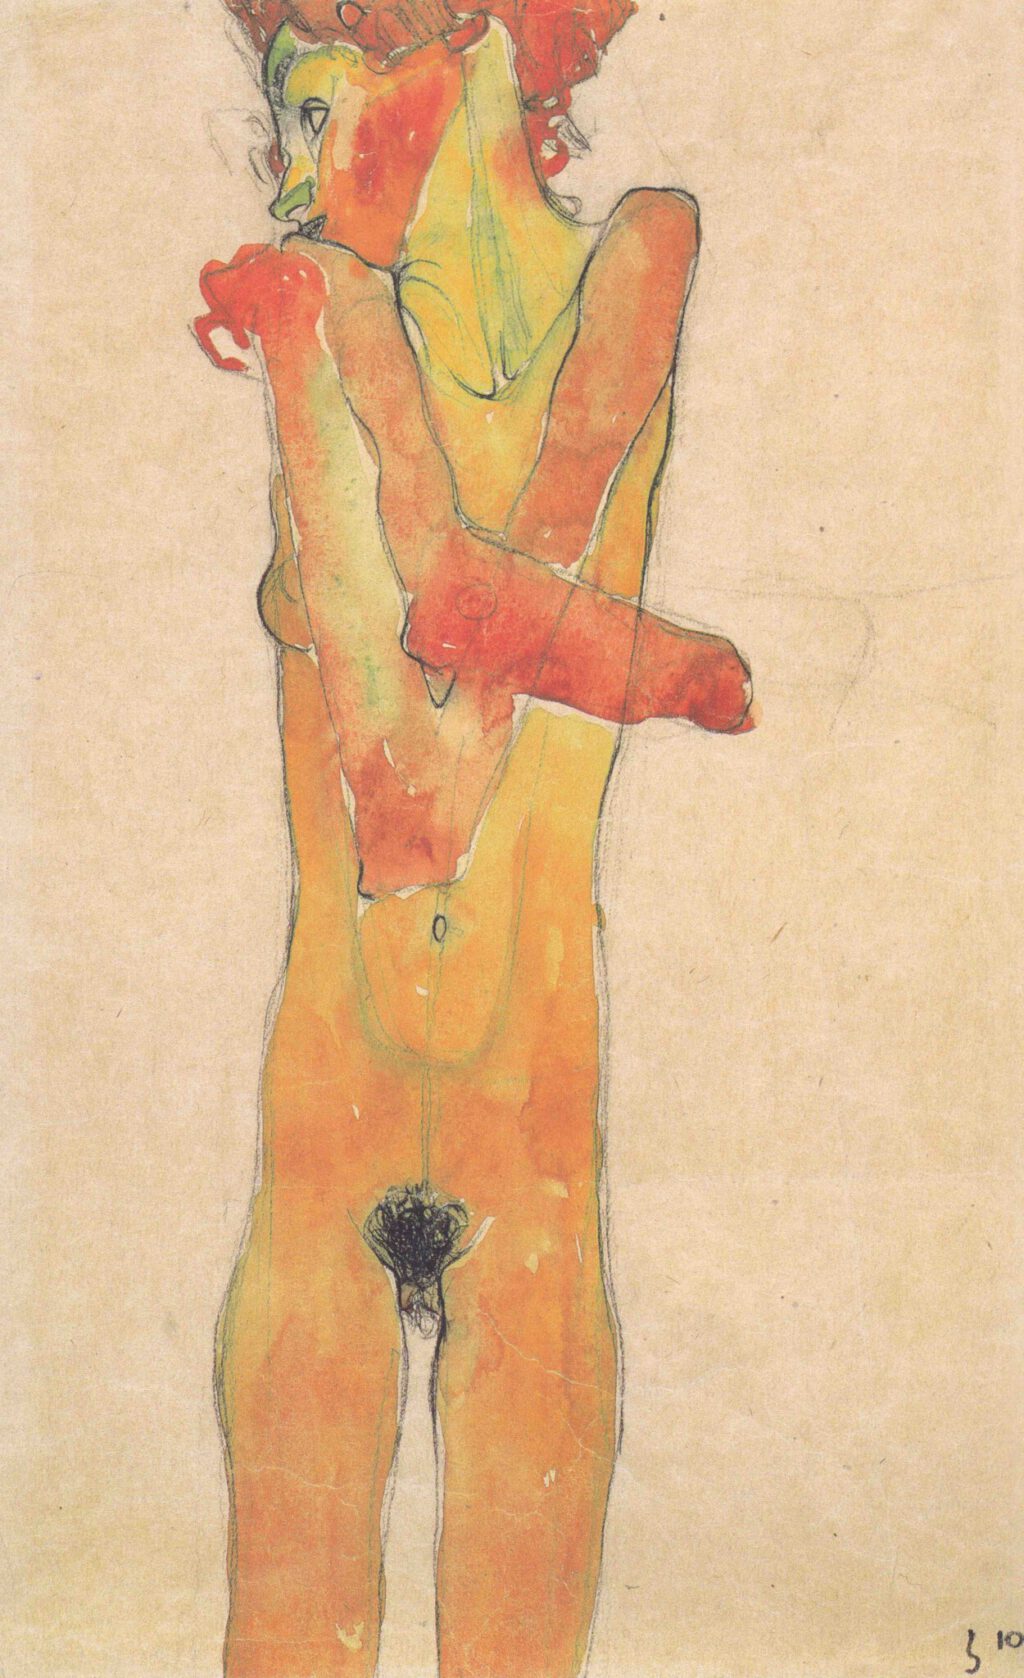 Egon Schiele “Mädchenakt mit verschränkten Armen” (Sister Gerti Schiele) 1910, Gouache, watercolour and pencil, 28 x 49 cm